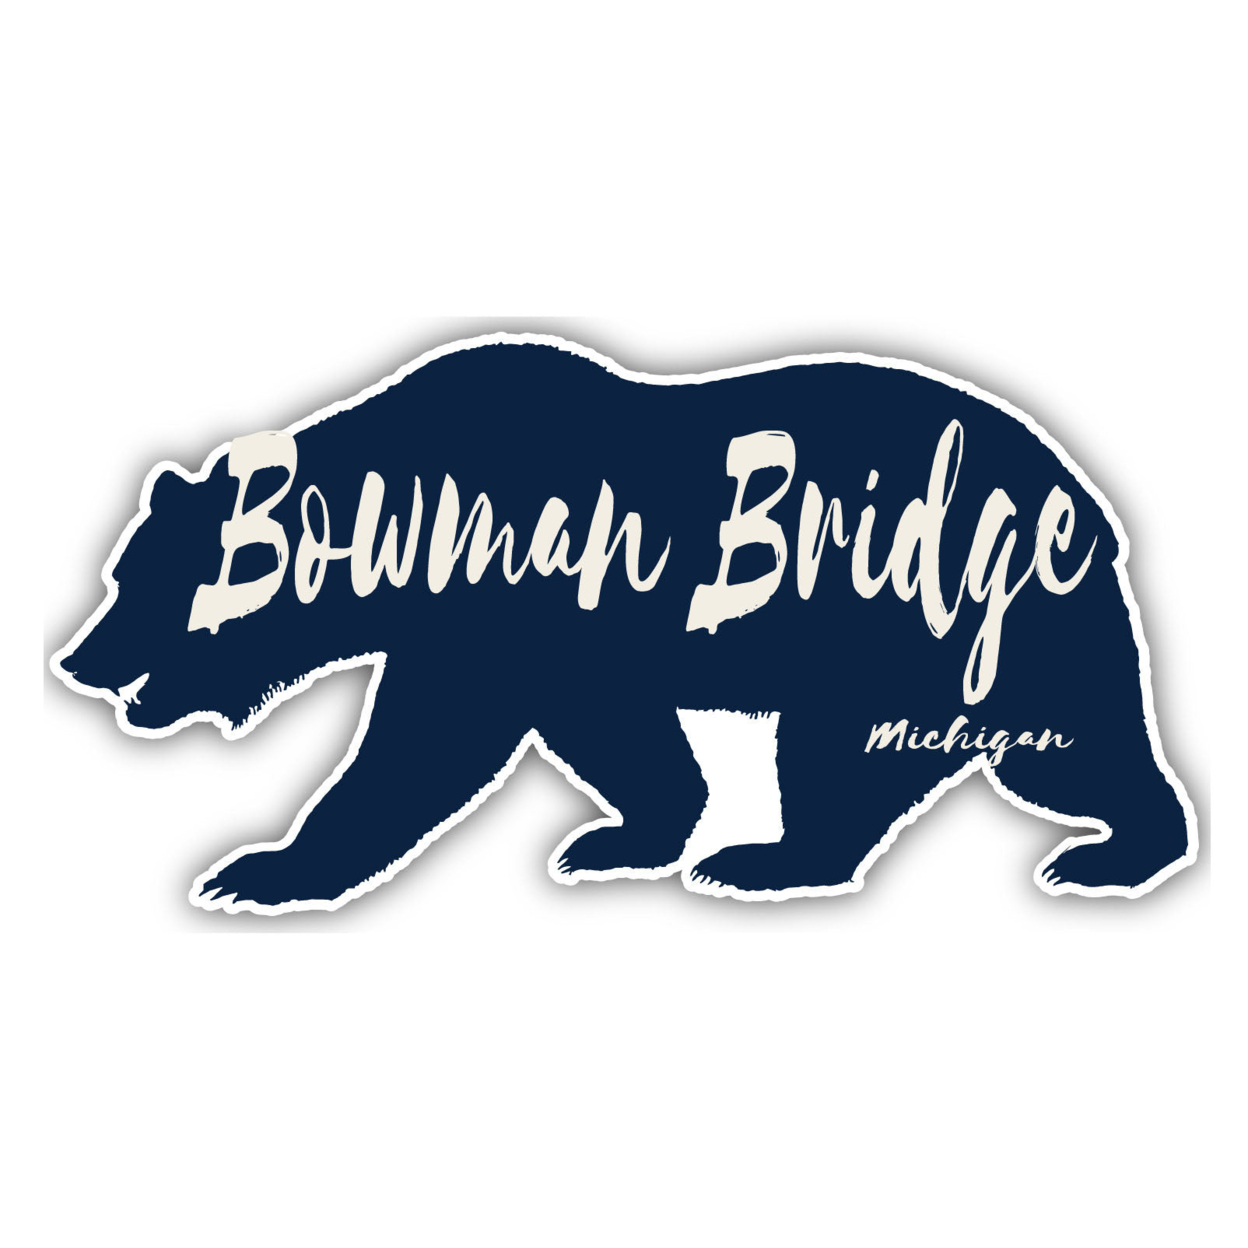 Bowman Bridge Michigan Souvenir Decorative Stickers (Choose Theme And Size) - 4-Pack, 6-Inch, Bear